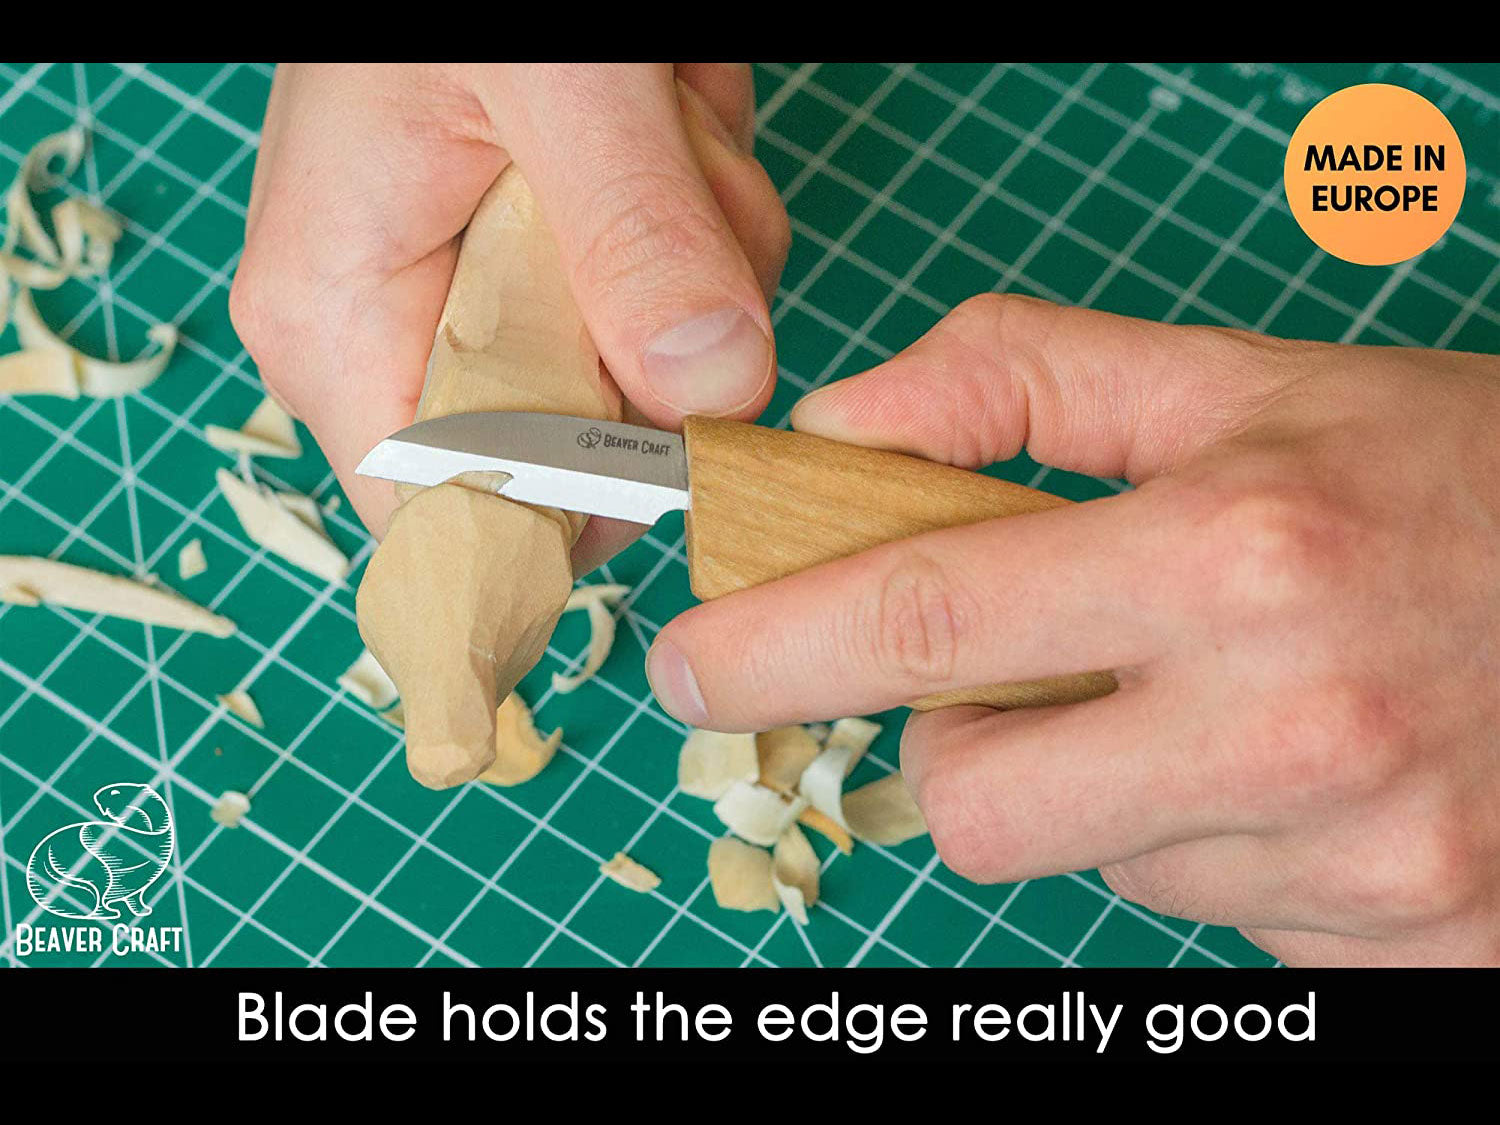 BeaverCraft S10 - Wood Carving Set of 12 Knives – BeaverCraft Tools